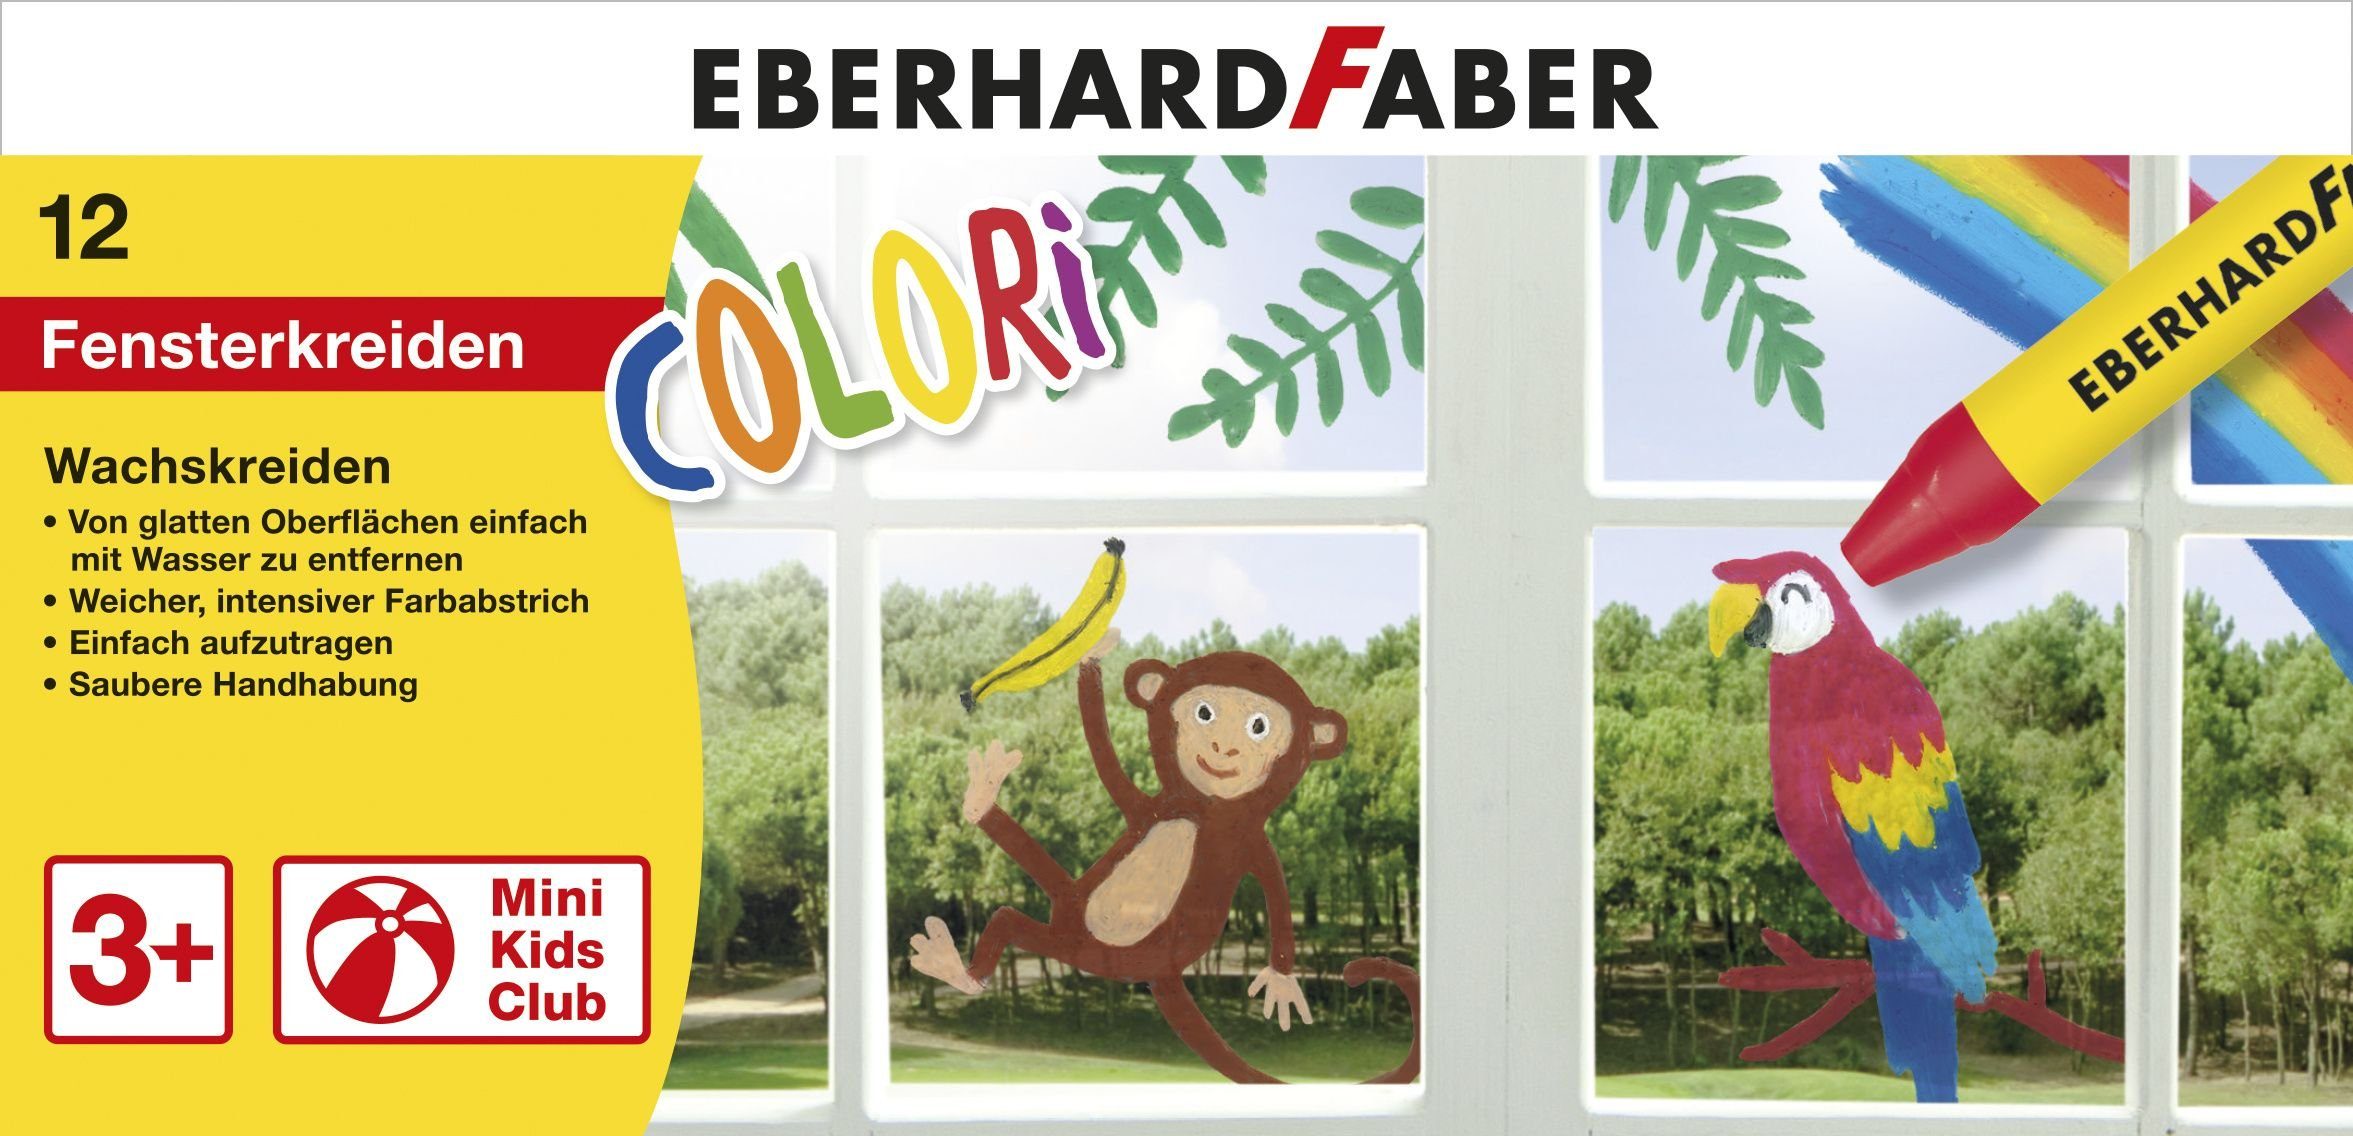 Eberhard Faber Handgelenkstütze 12 EBERHARD FABER COLORI Wachsmalkreiden farbsortiert